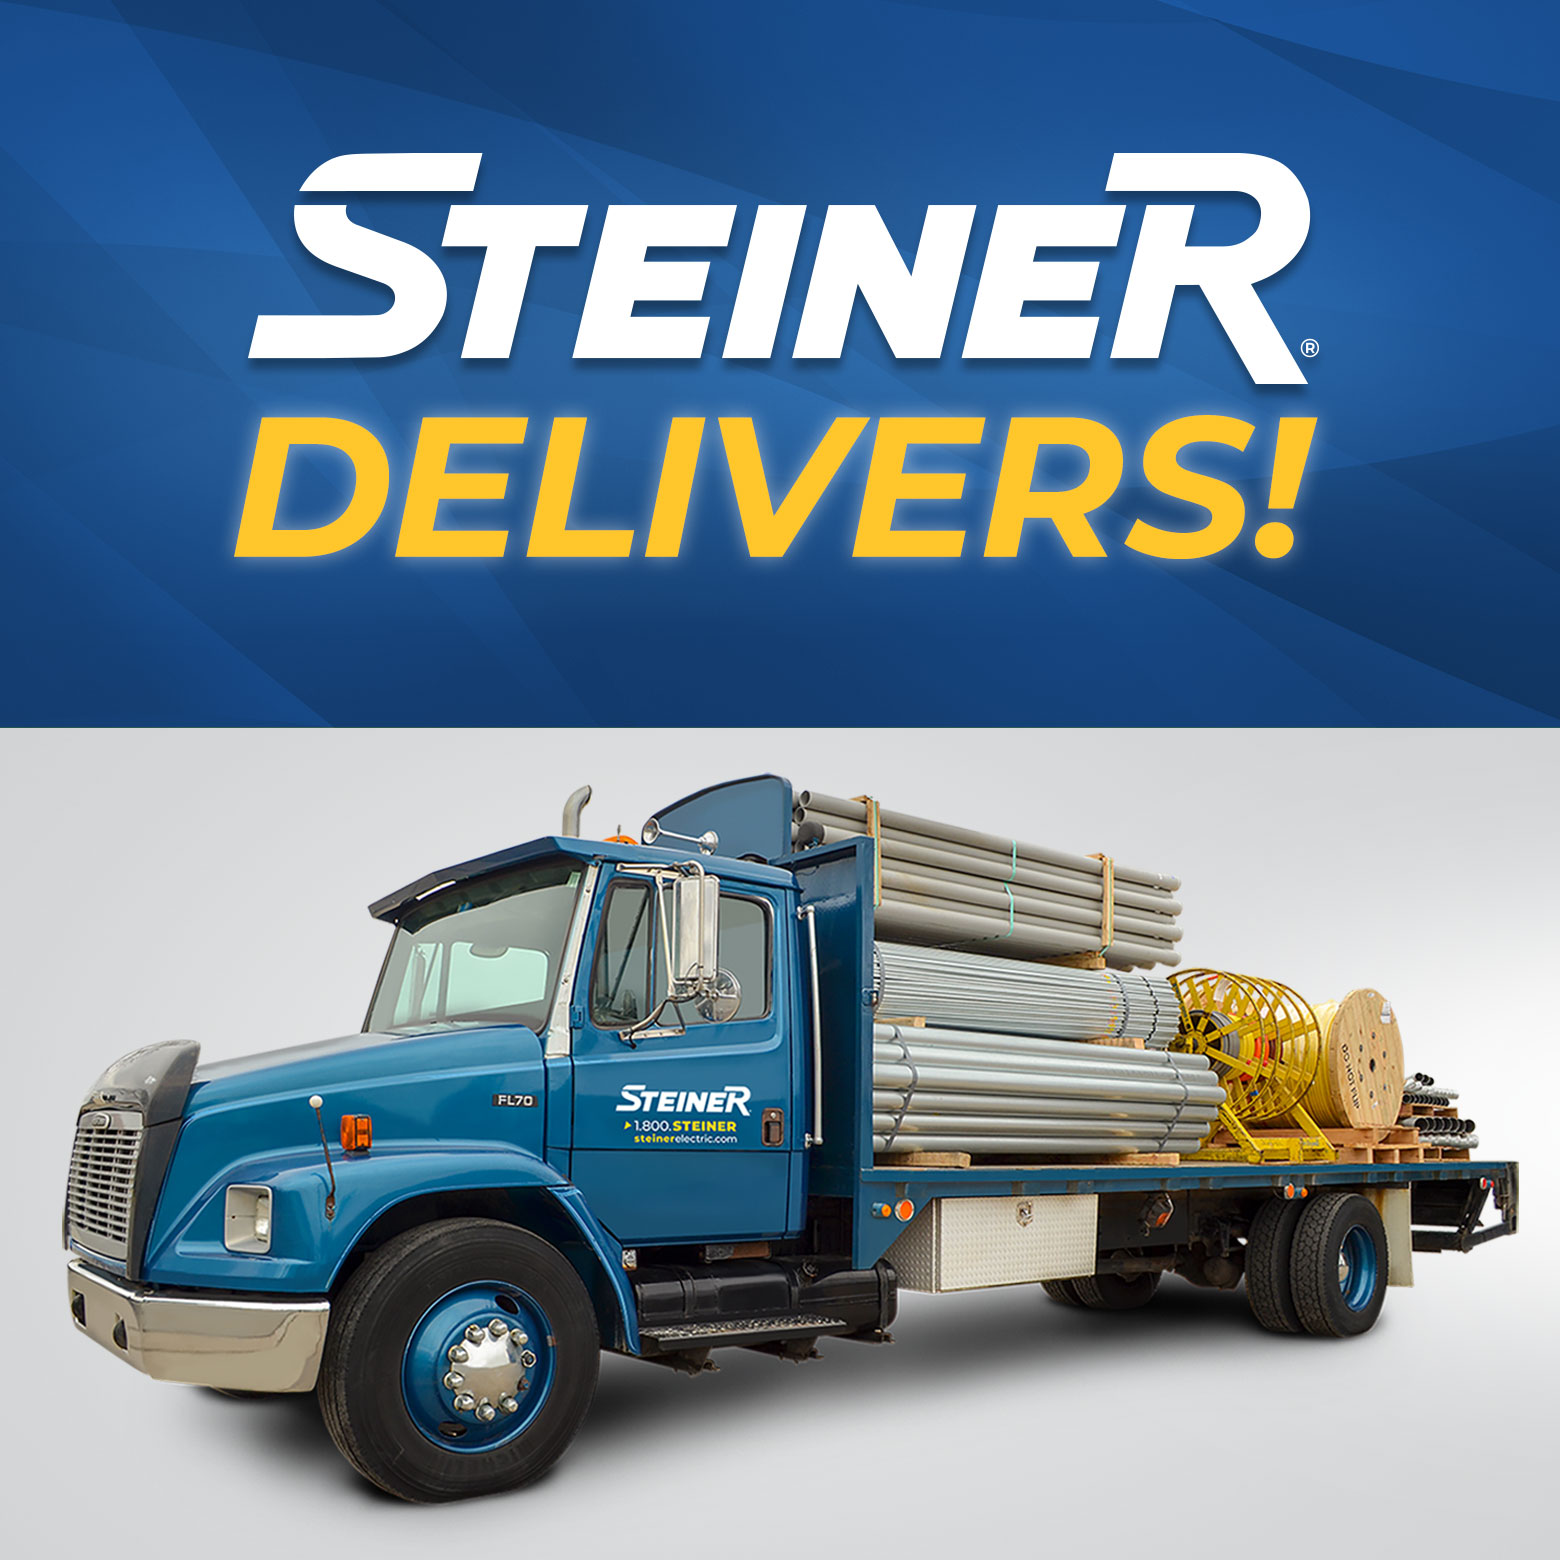 Steiner Delivers